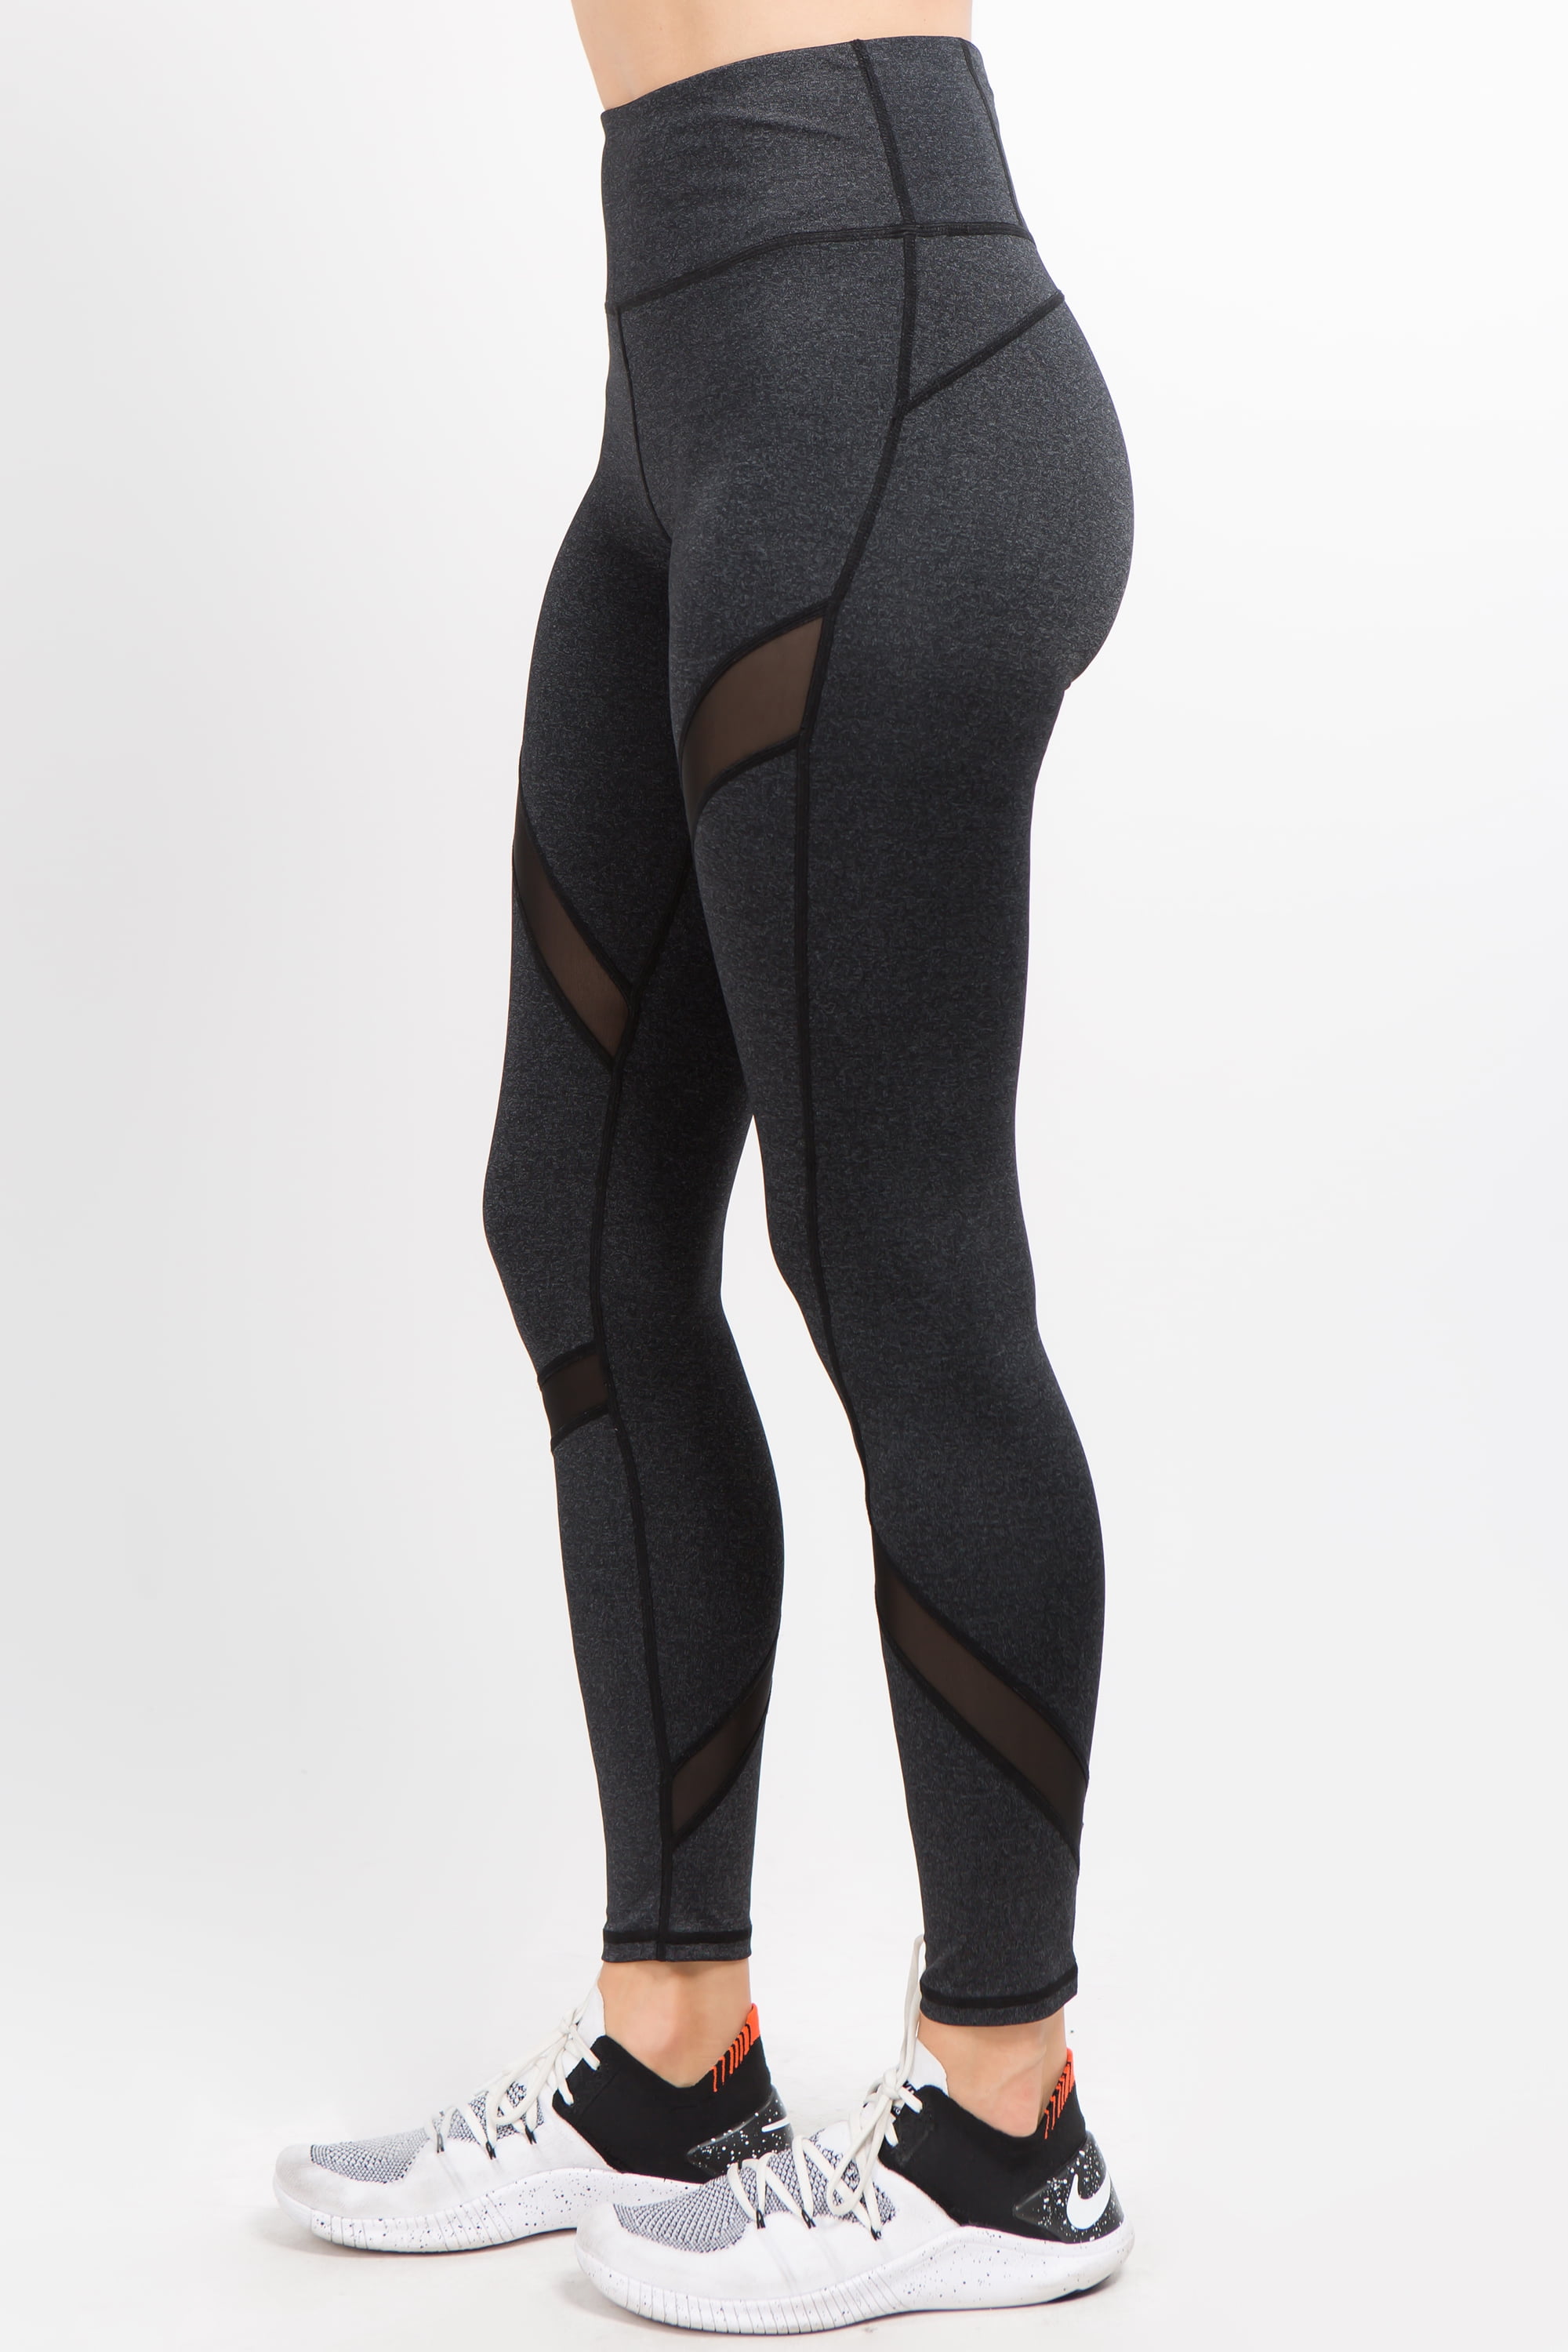 Mesh-Panel Activewear Ankle Length Leggings w Back Pocket, Heather Charcoal